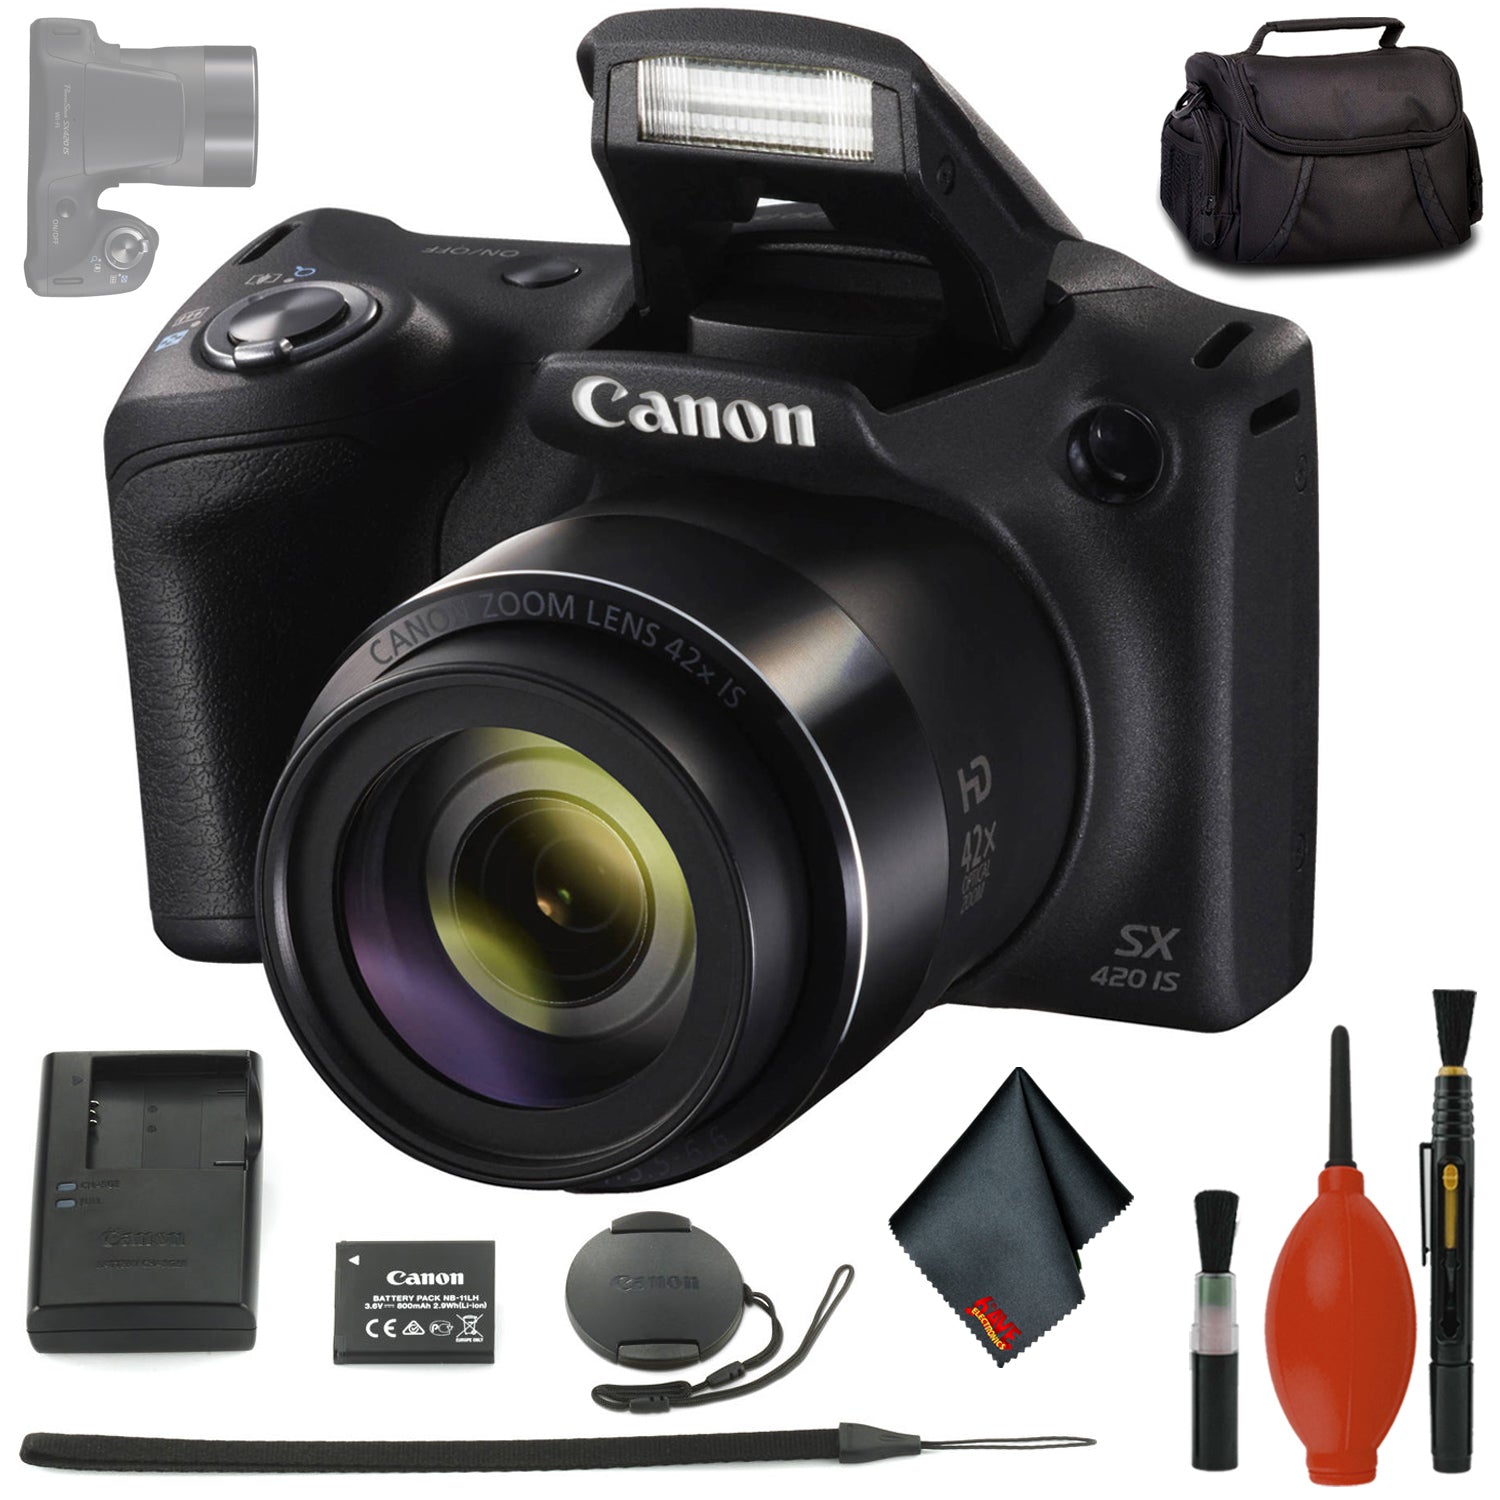 Canon PowerShot SX420 IS Digital Camera (Black) - NB-11L Battery - Lens Cap - Wrist Strap - CASE - Cleaning Kit Base Bundle